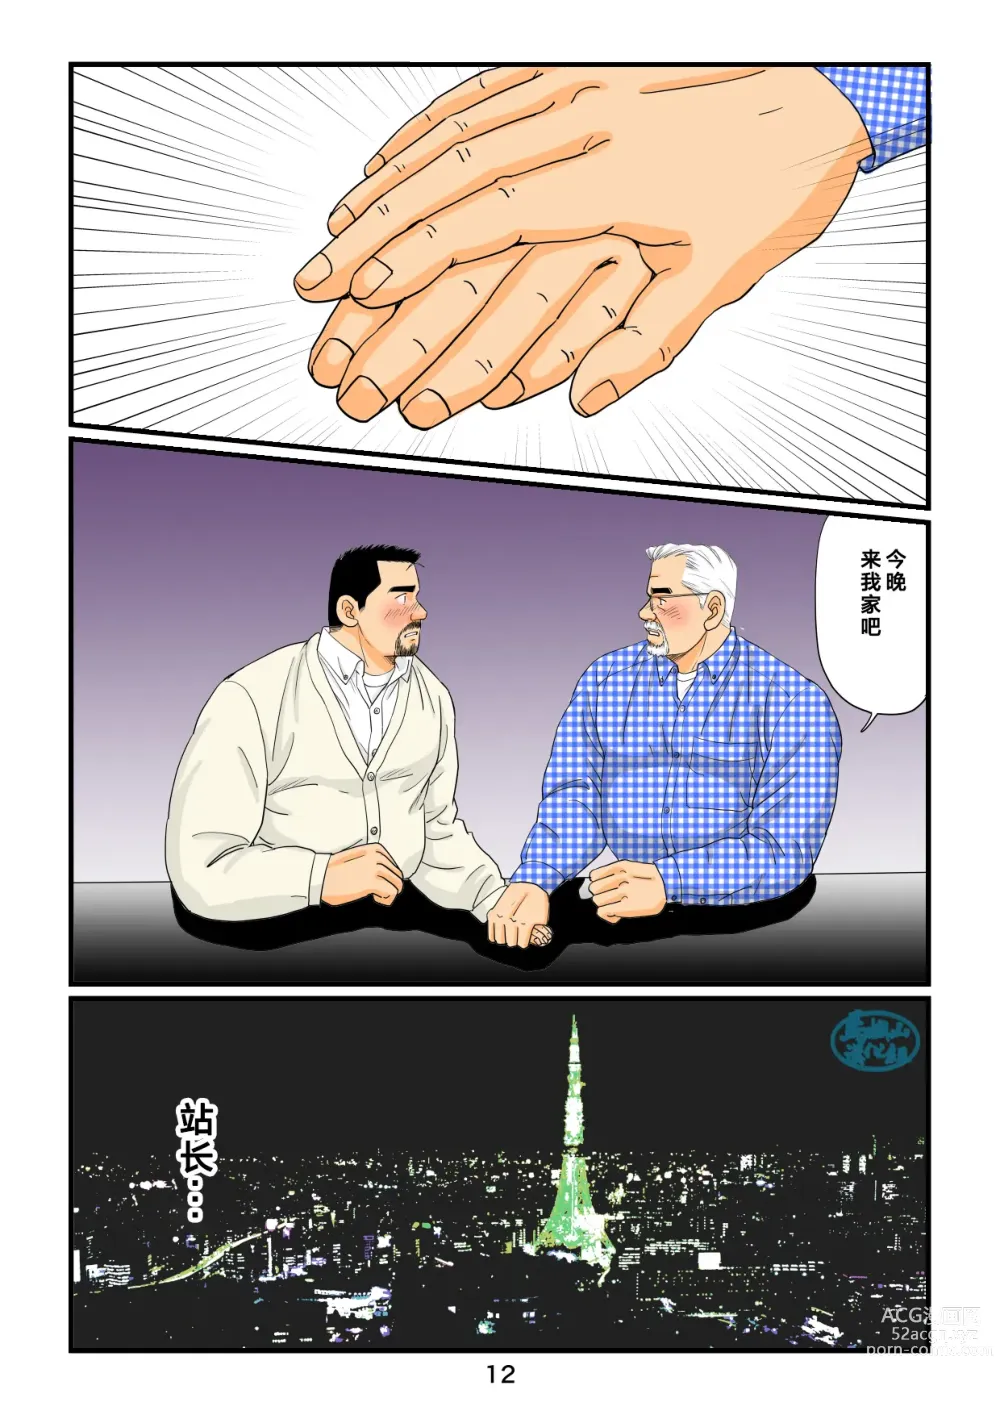 Page 12 of manga 「铁道员的浪漫」 第三回 站长与铁道员之夜